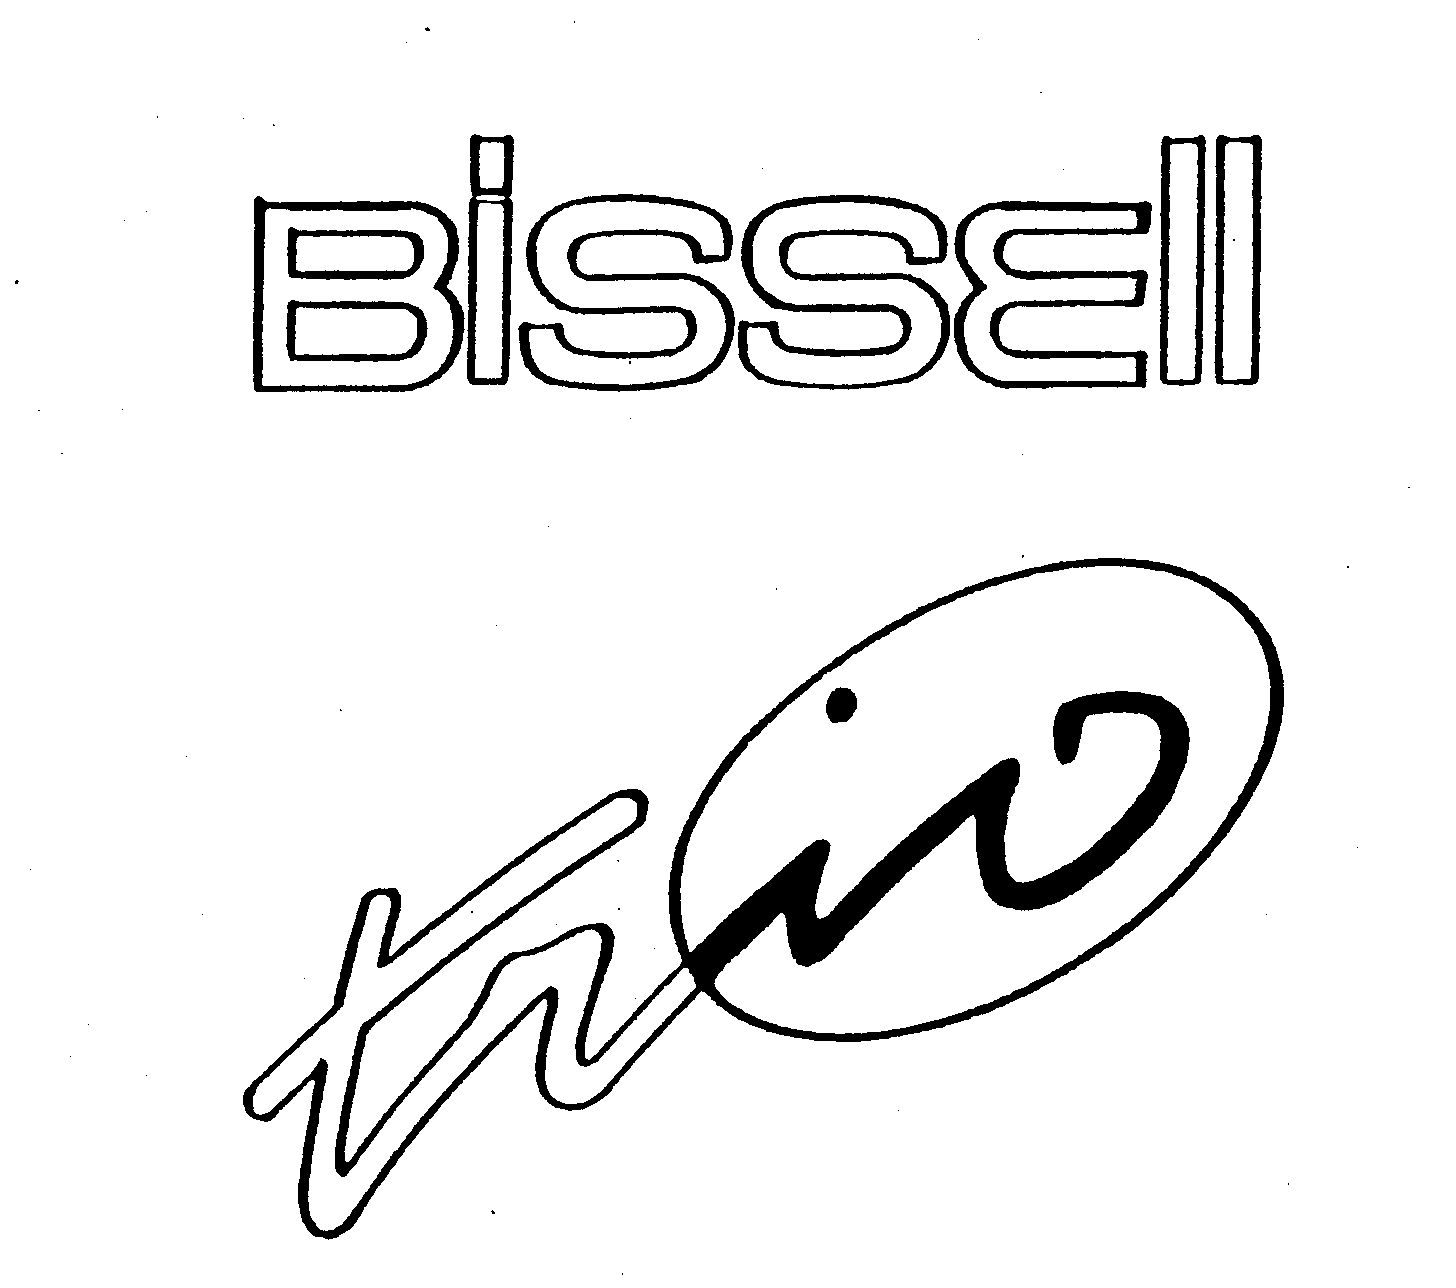  BISSELL TRIO